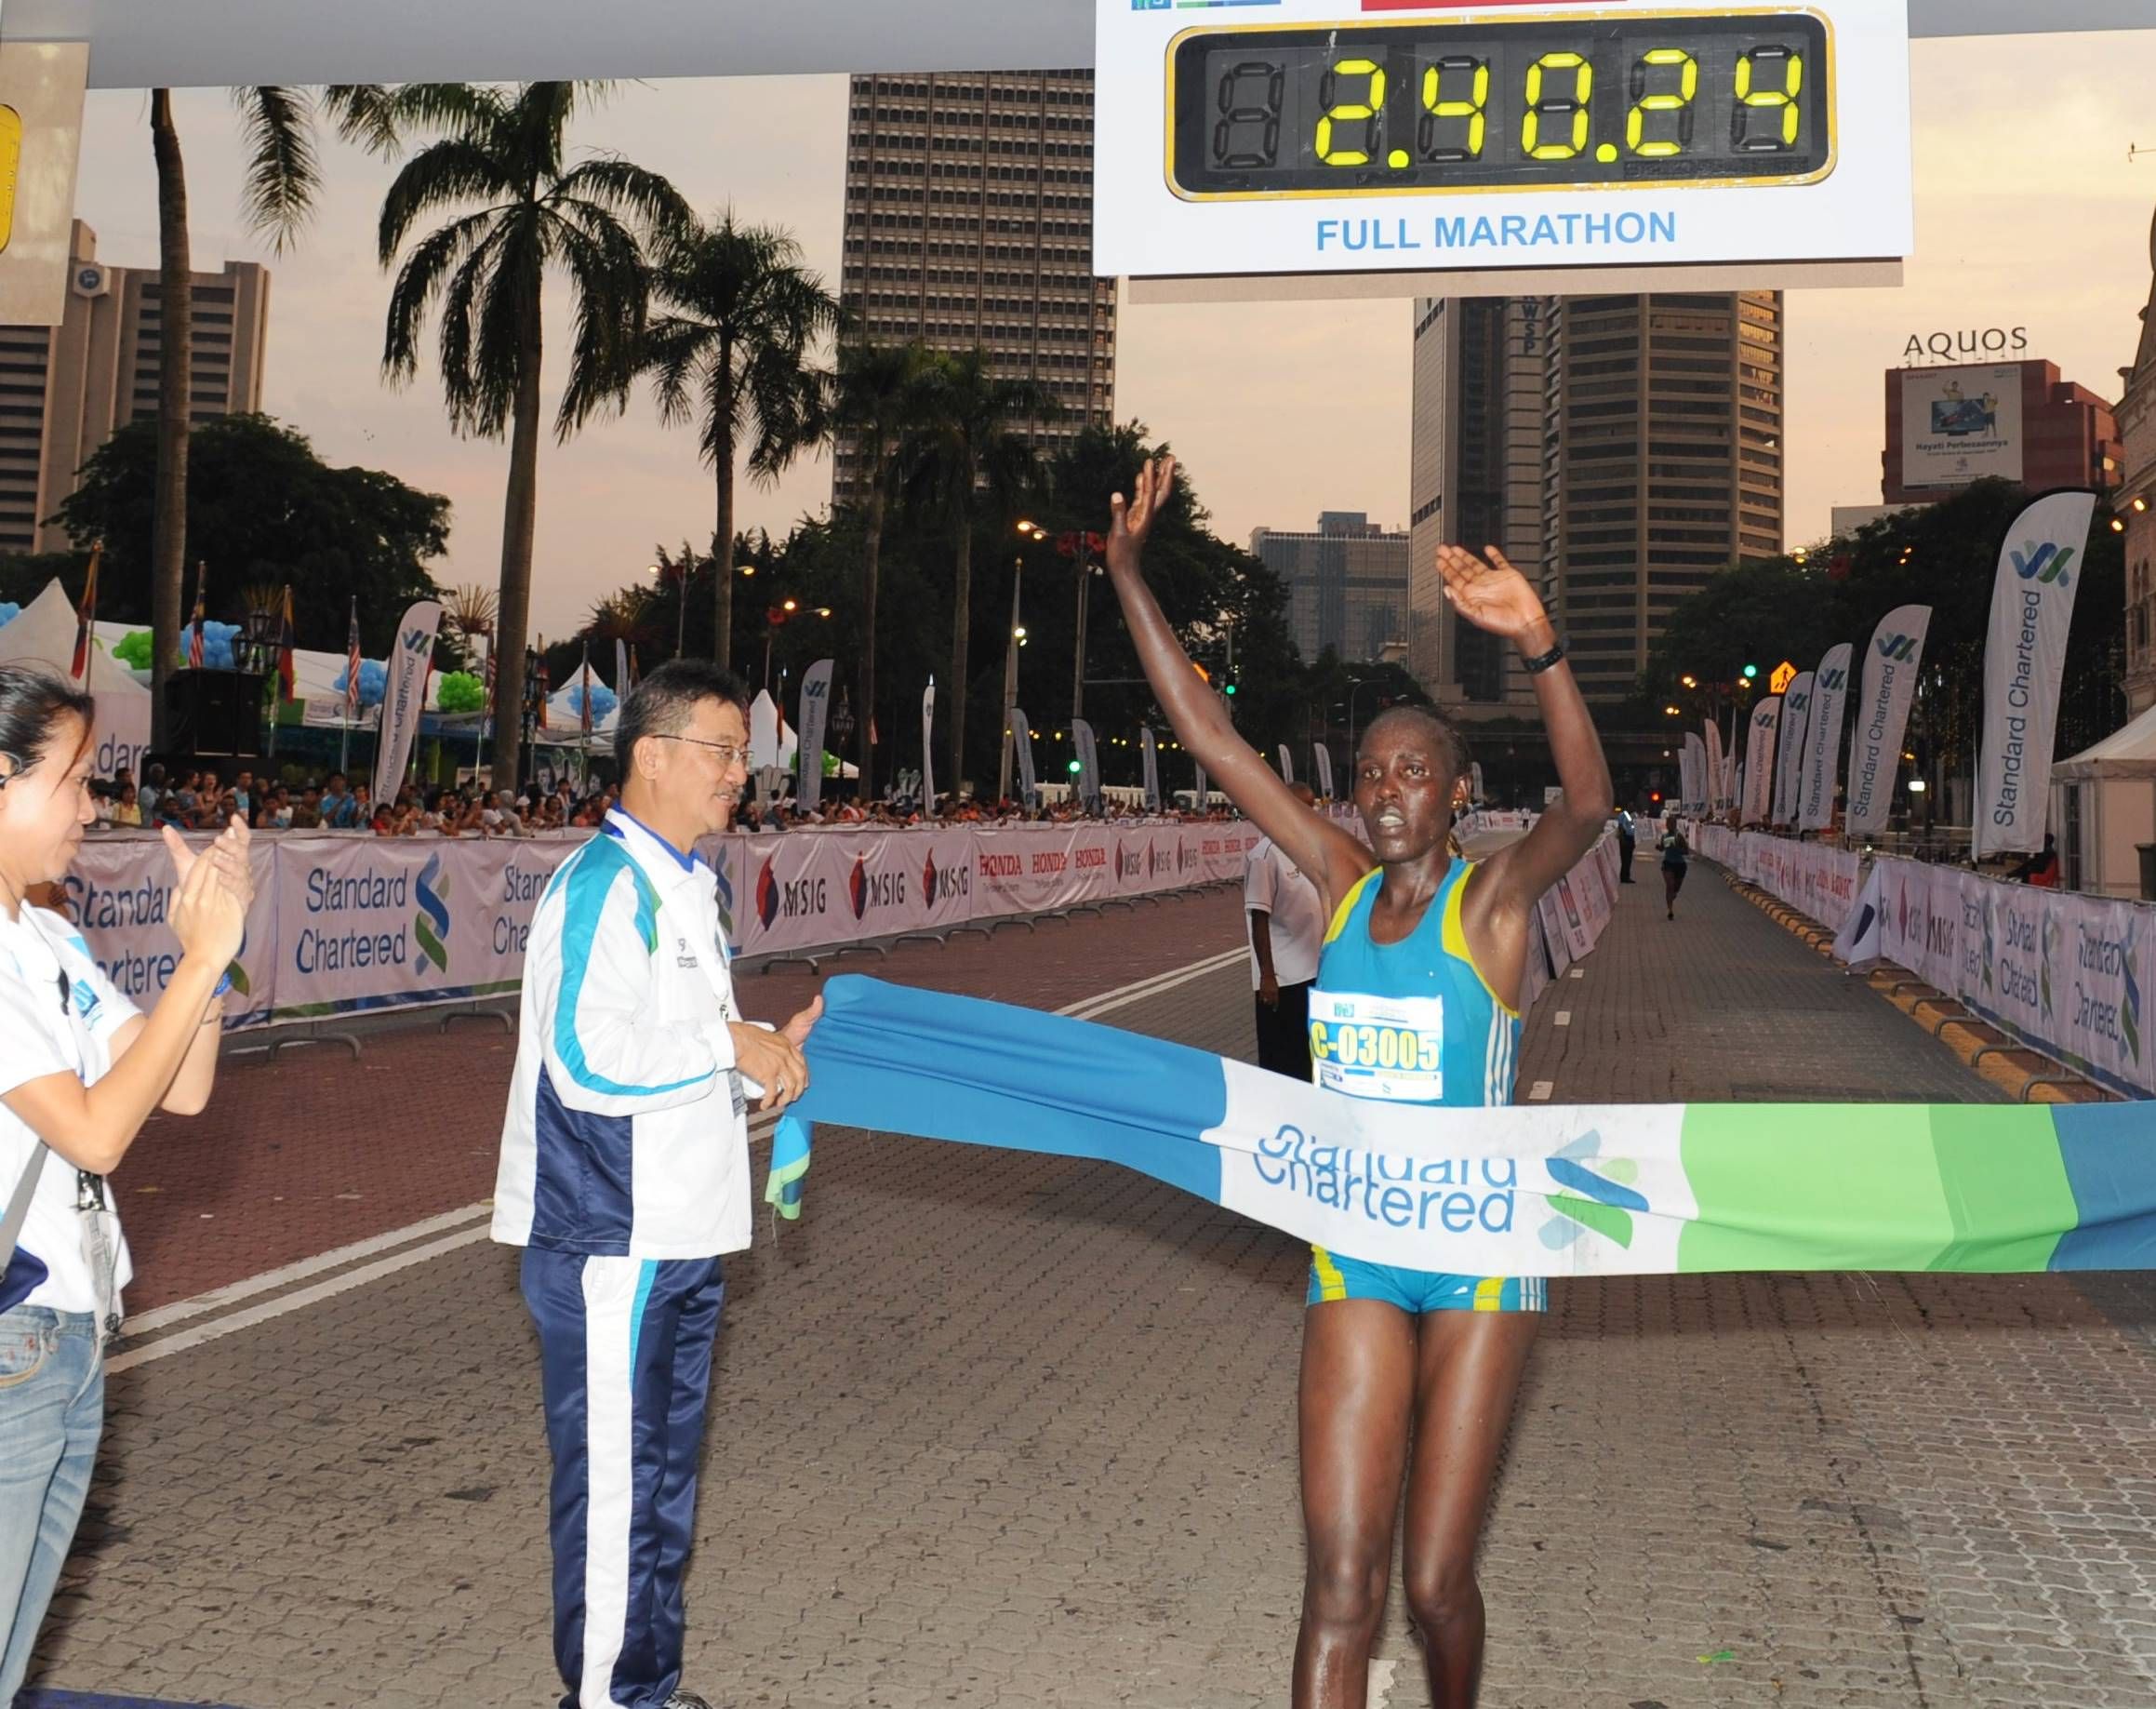 Elizabeth Jeruiyot Chemweno coming up top in the Women's Full Marathon Open Category